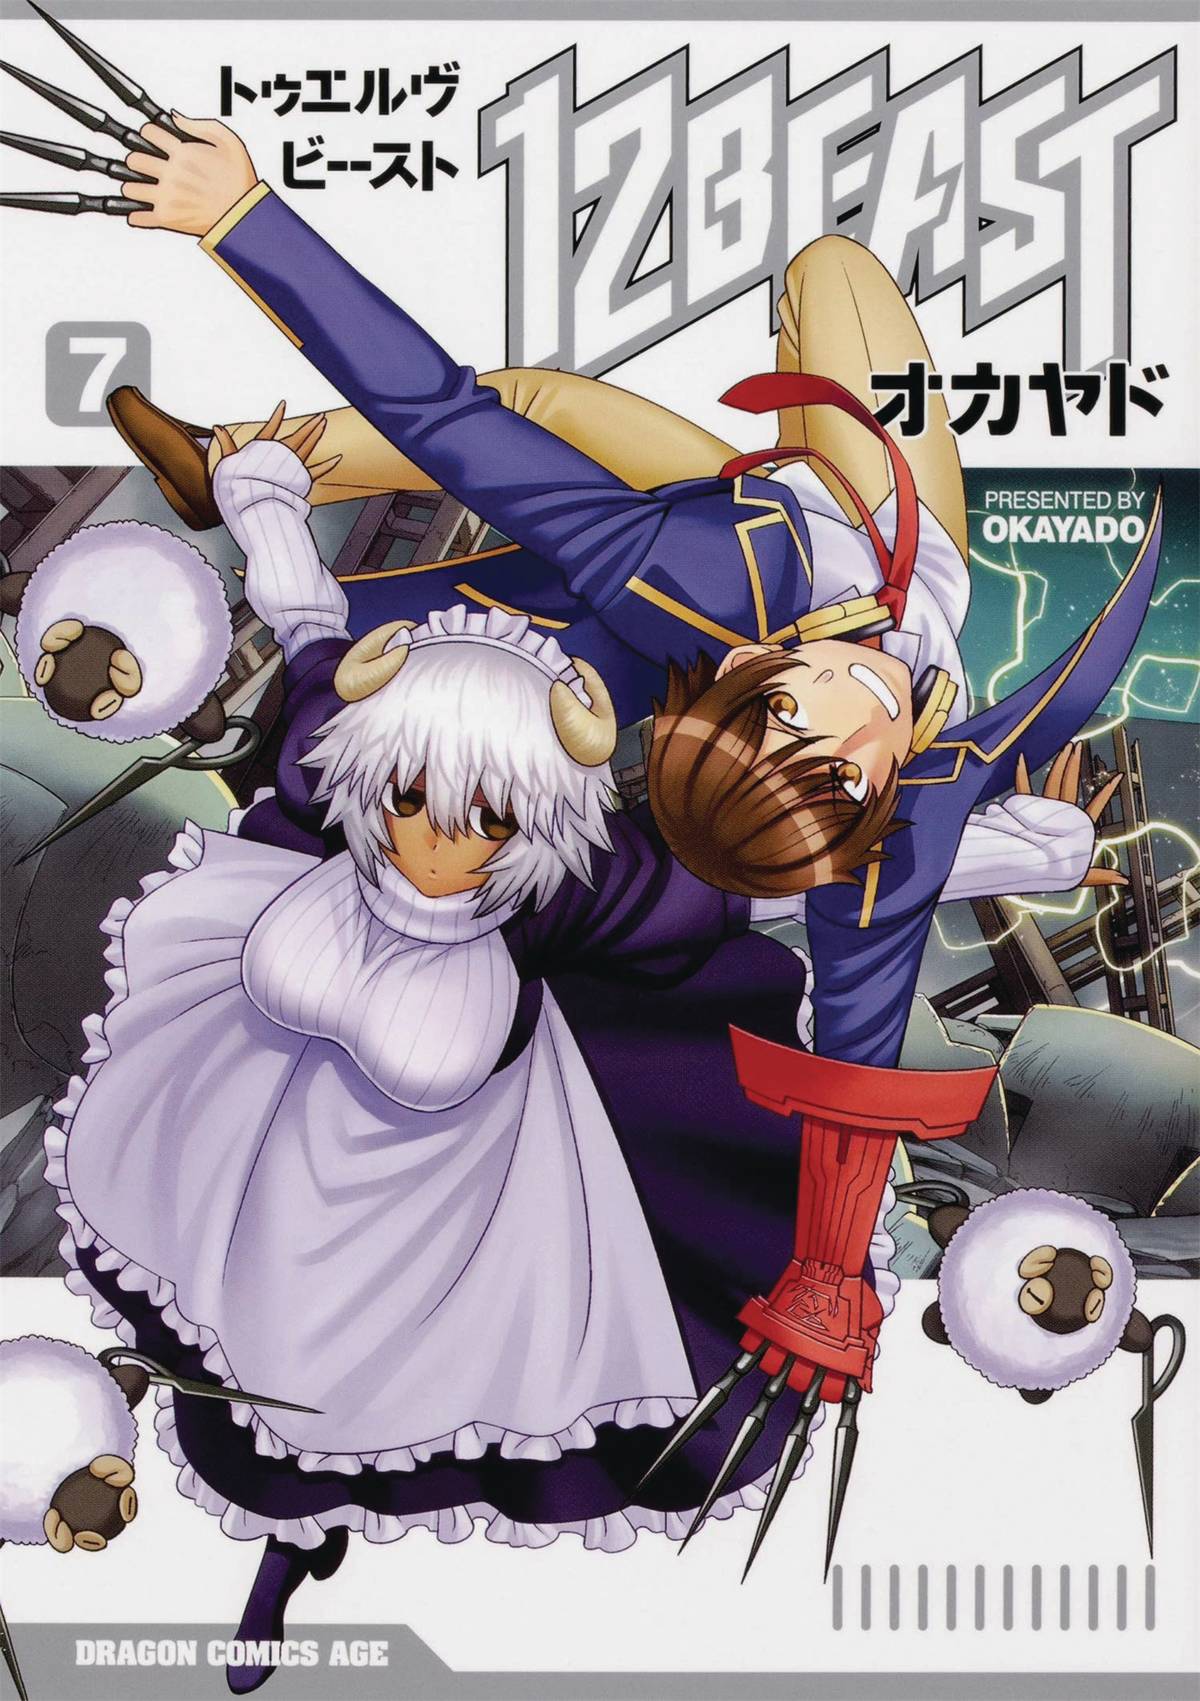 12 Beast Manga Volume 7 (Mature)